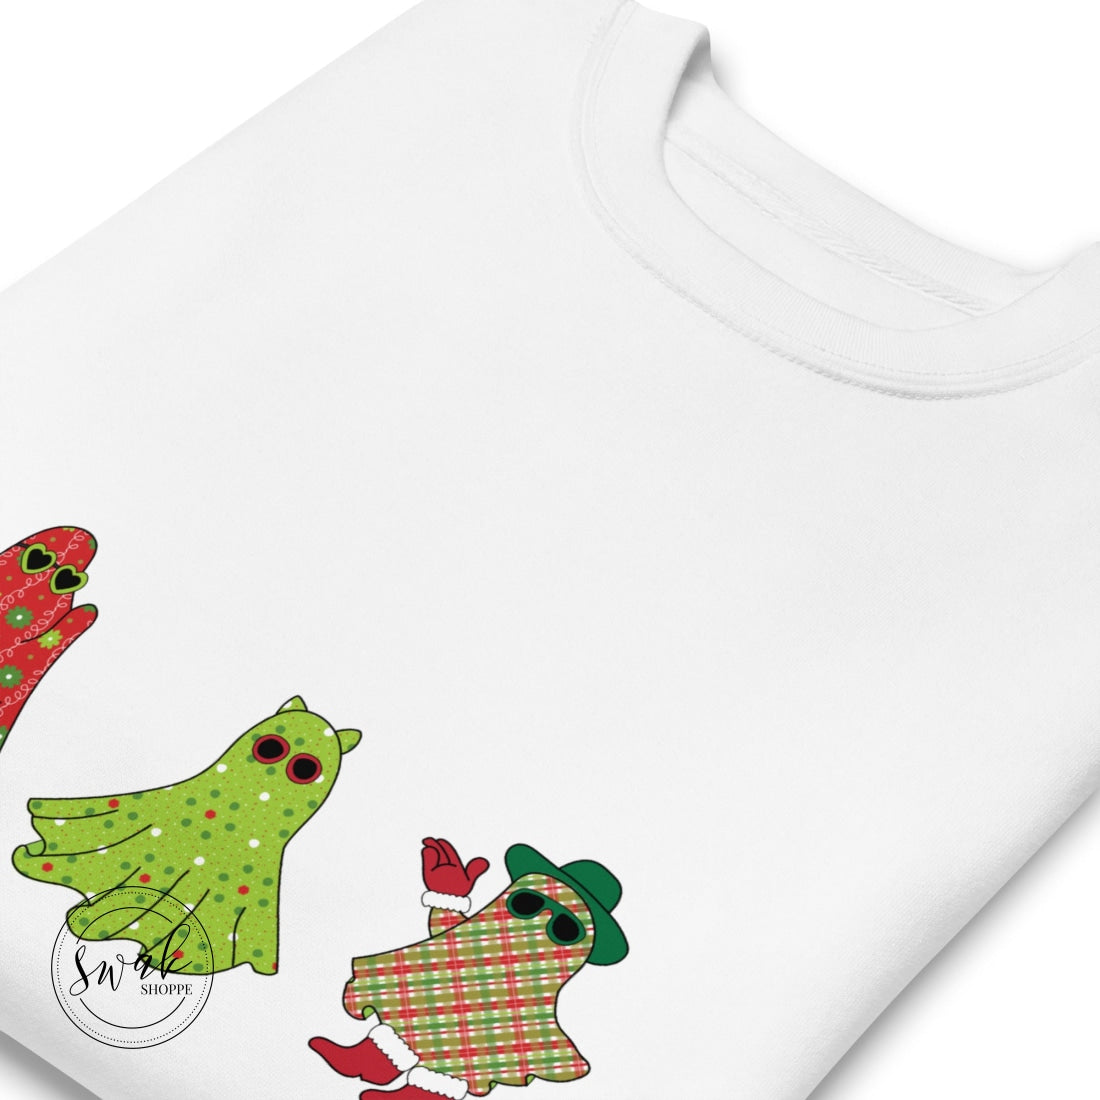 Holiday Festive Ghosts Unisex Premium Sweatshirt